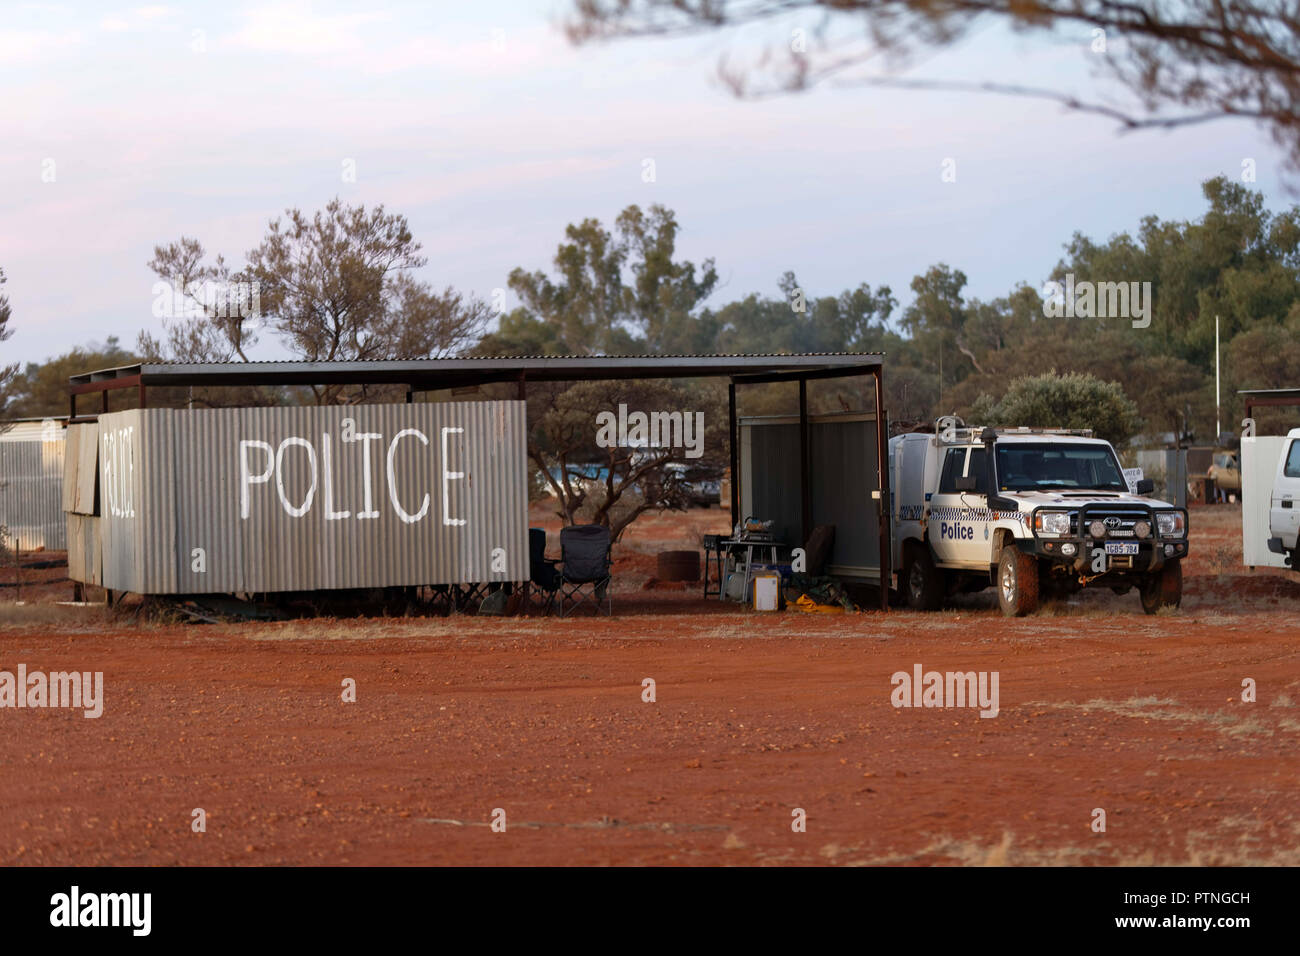 Police camp at the bush horse races at Landor, 1000km north of Perth, Western Australia. Stock Photo